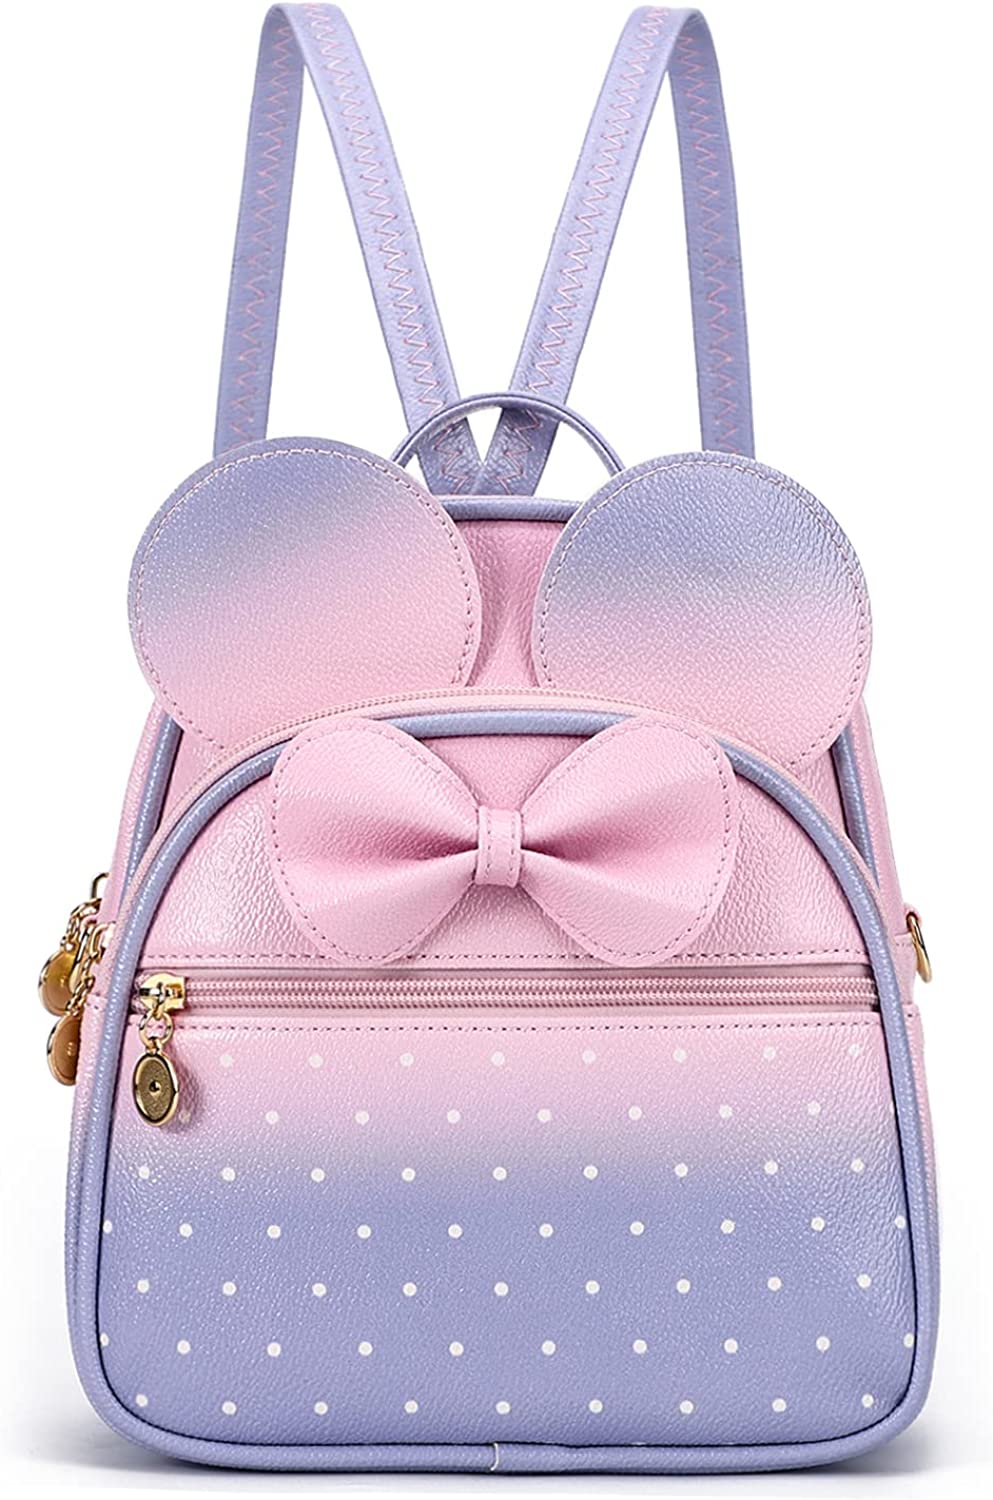 KL928 Girls Bowknot Polka Dot Cute Mini Backpack Small Daypacks ...